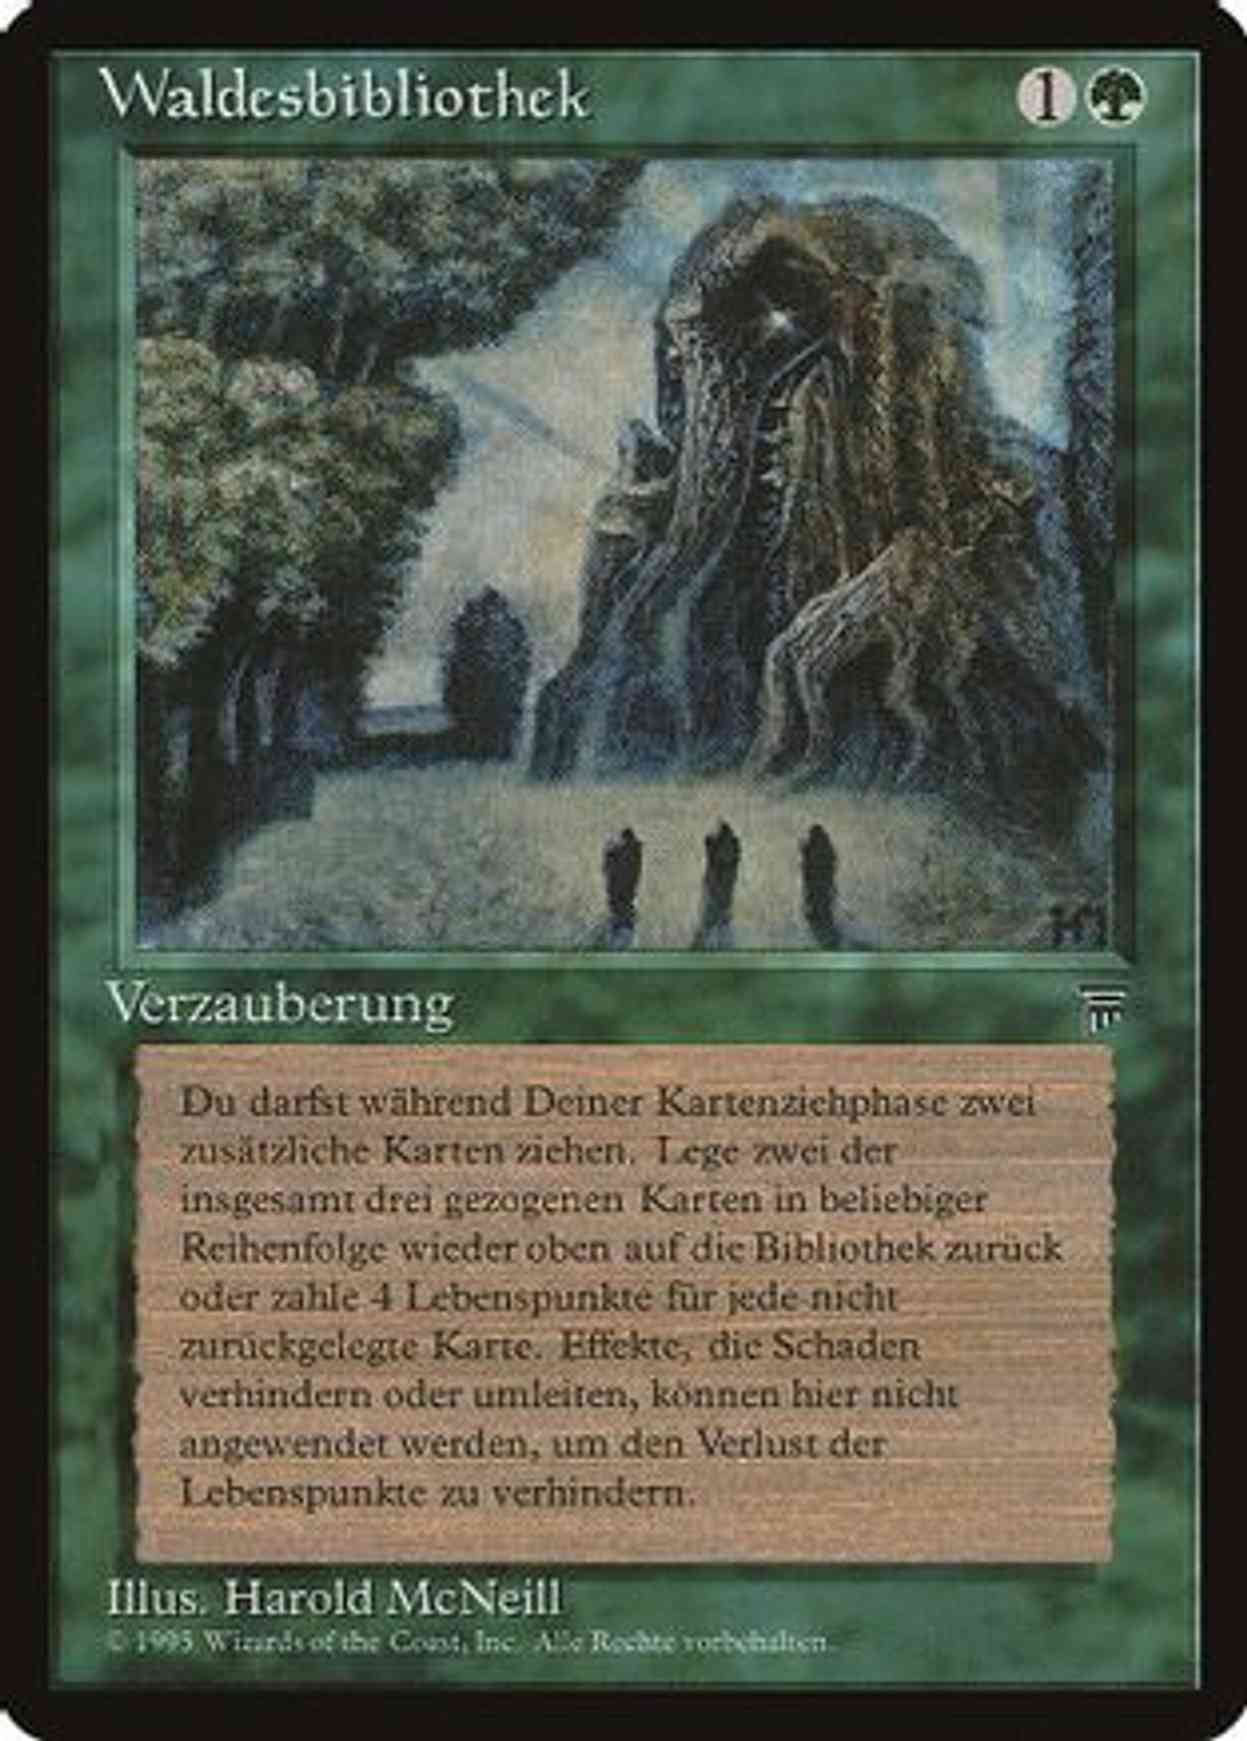 Sylvan Library (German)- "Waldesbibliothek" magic card front